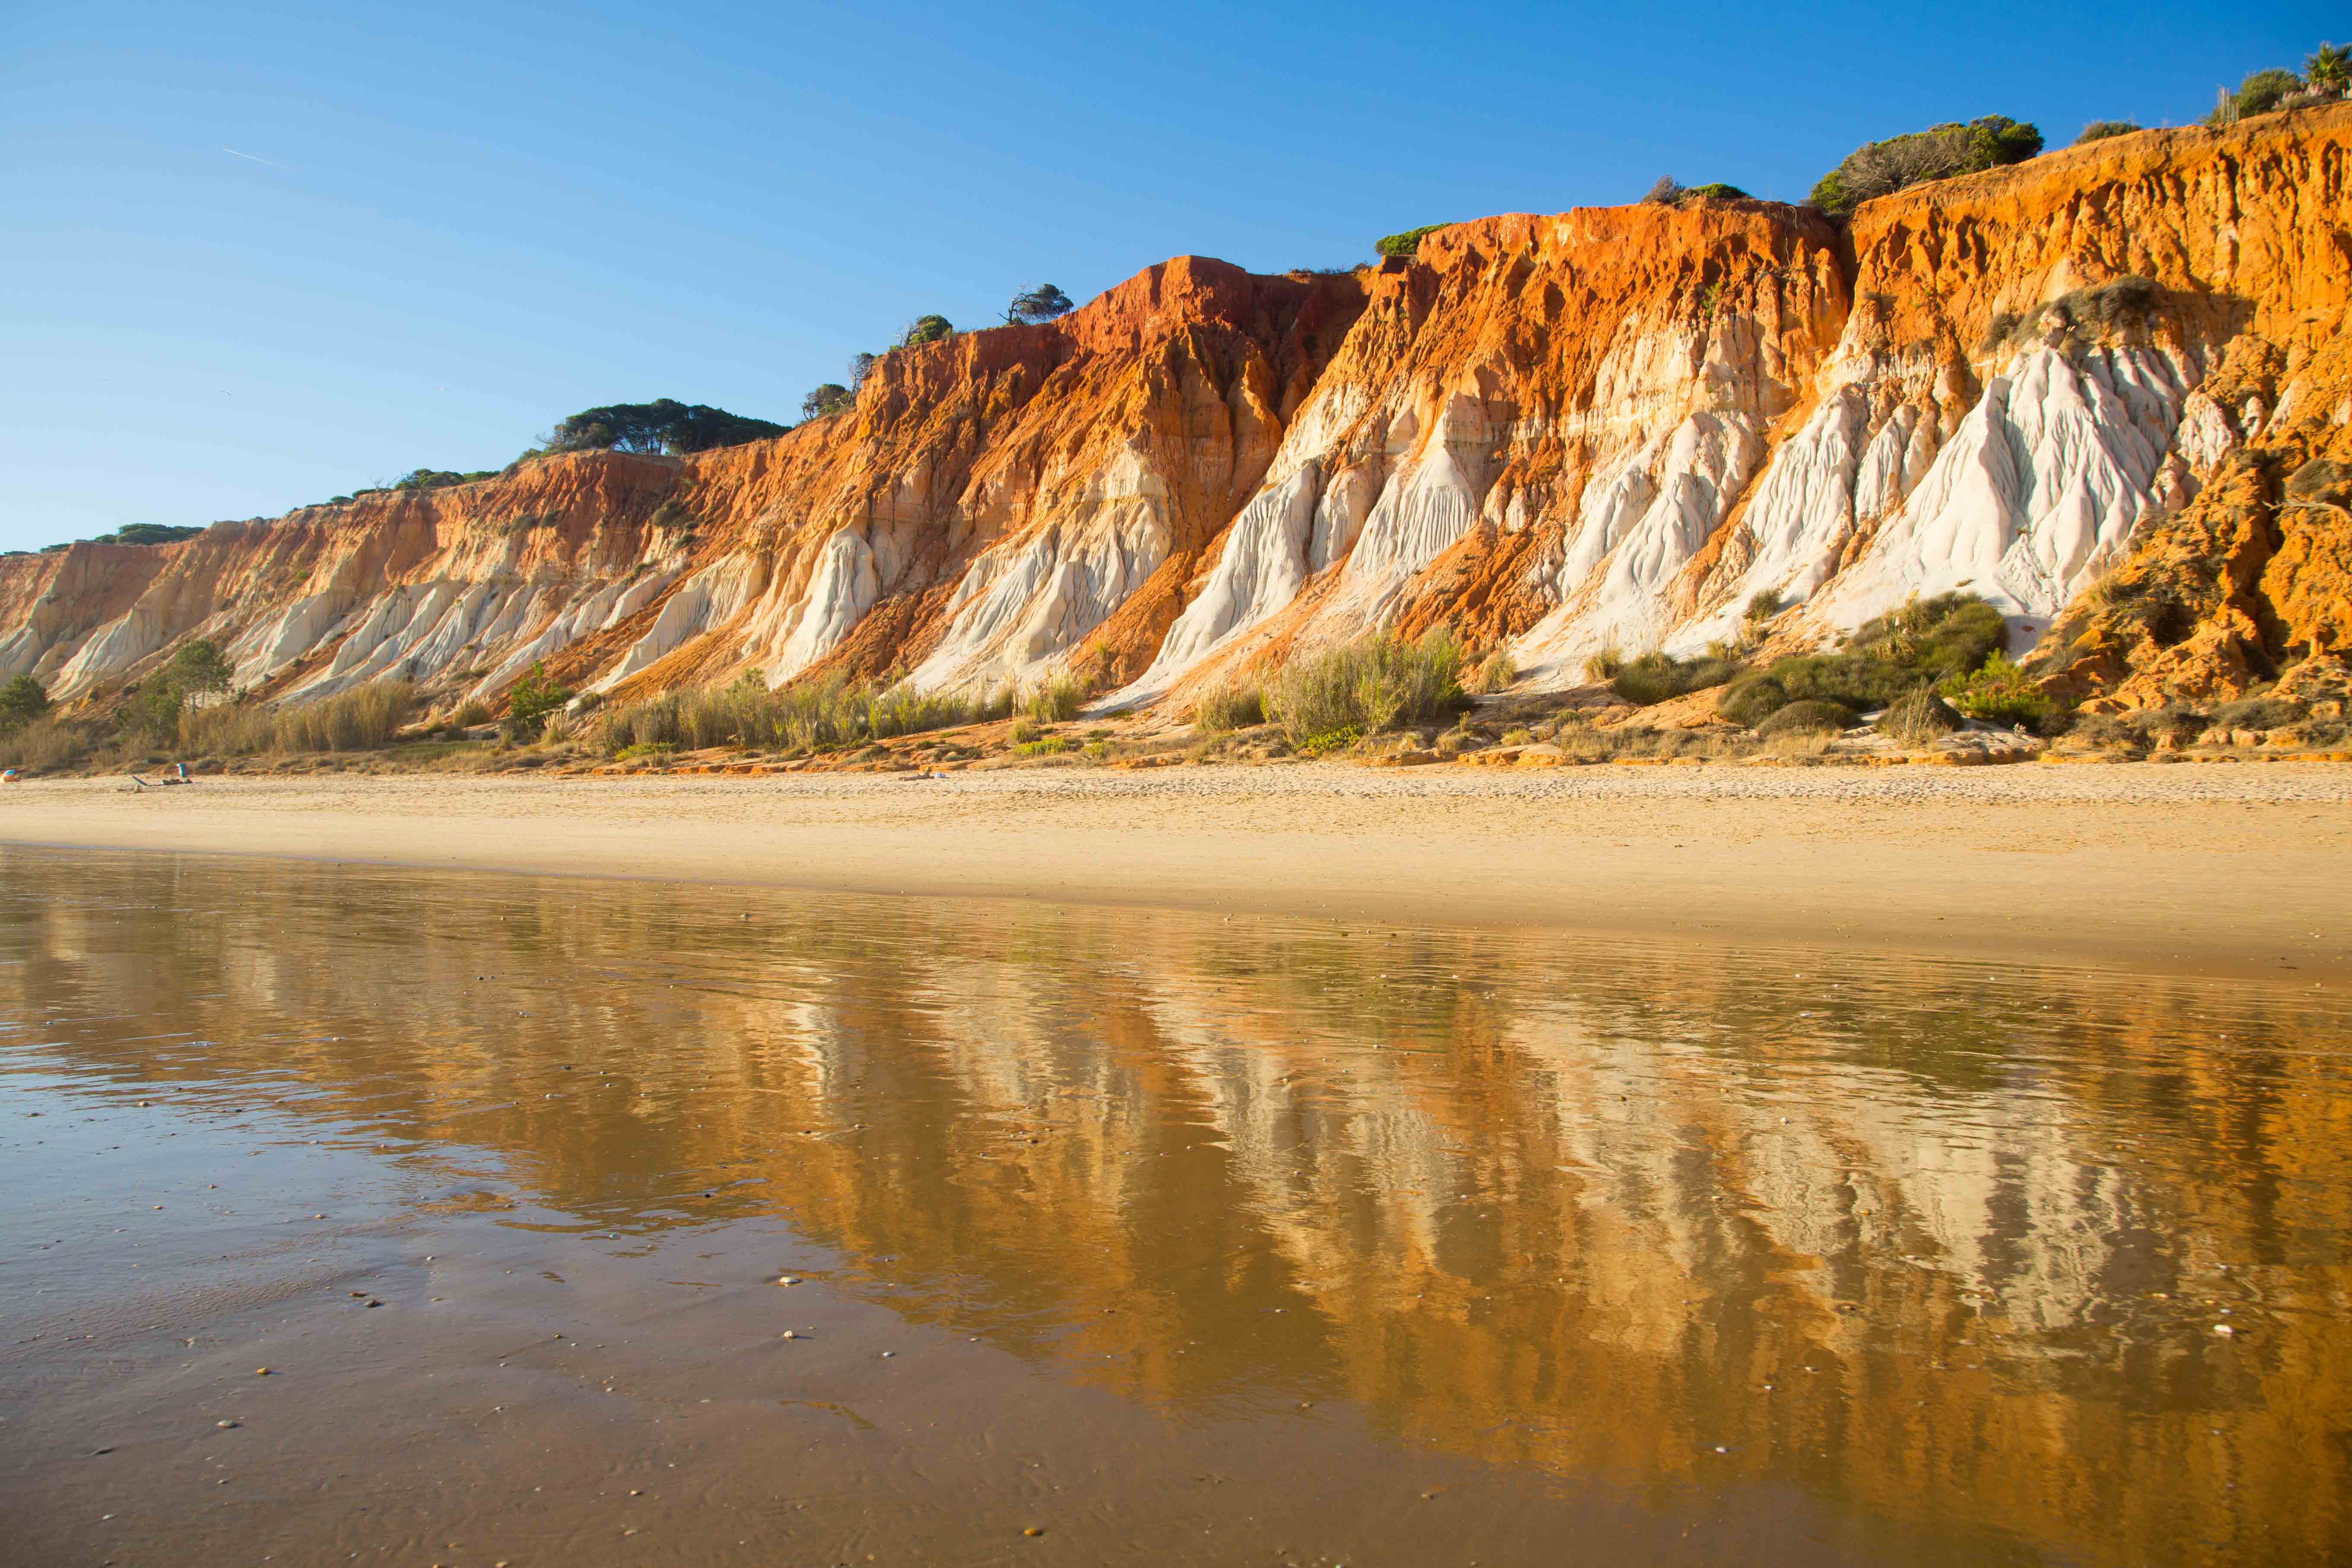 Gorgeous beaches abound in the Algarve – such as the dramatic golden cliffs of Praia da Falésia